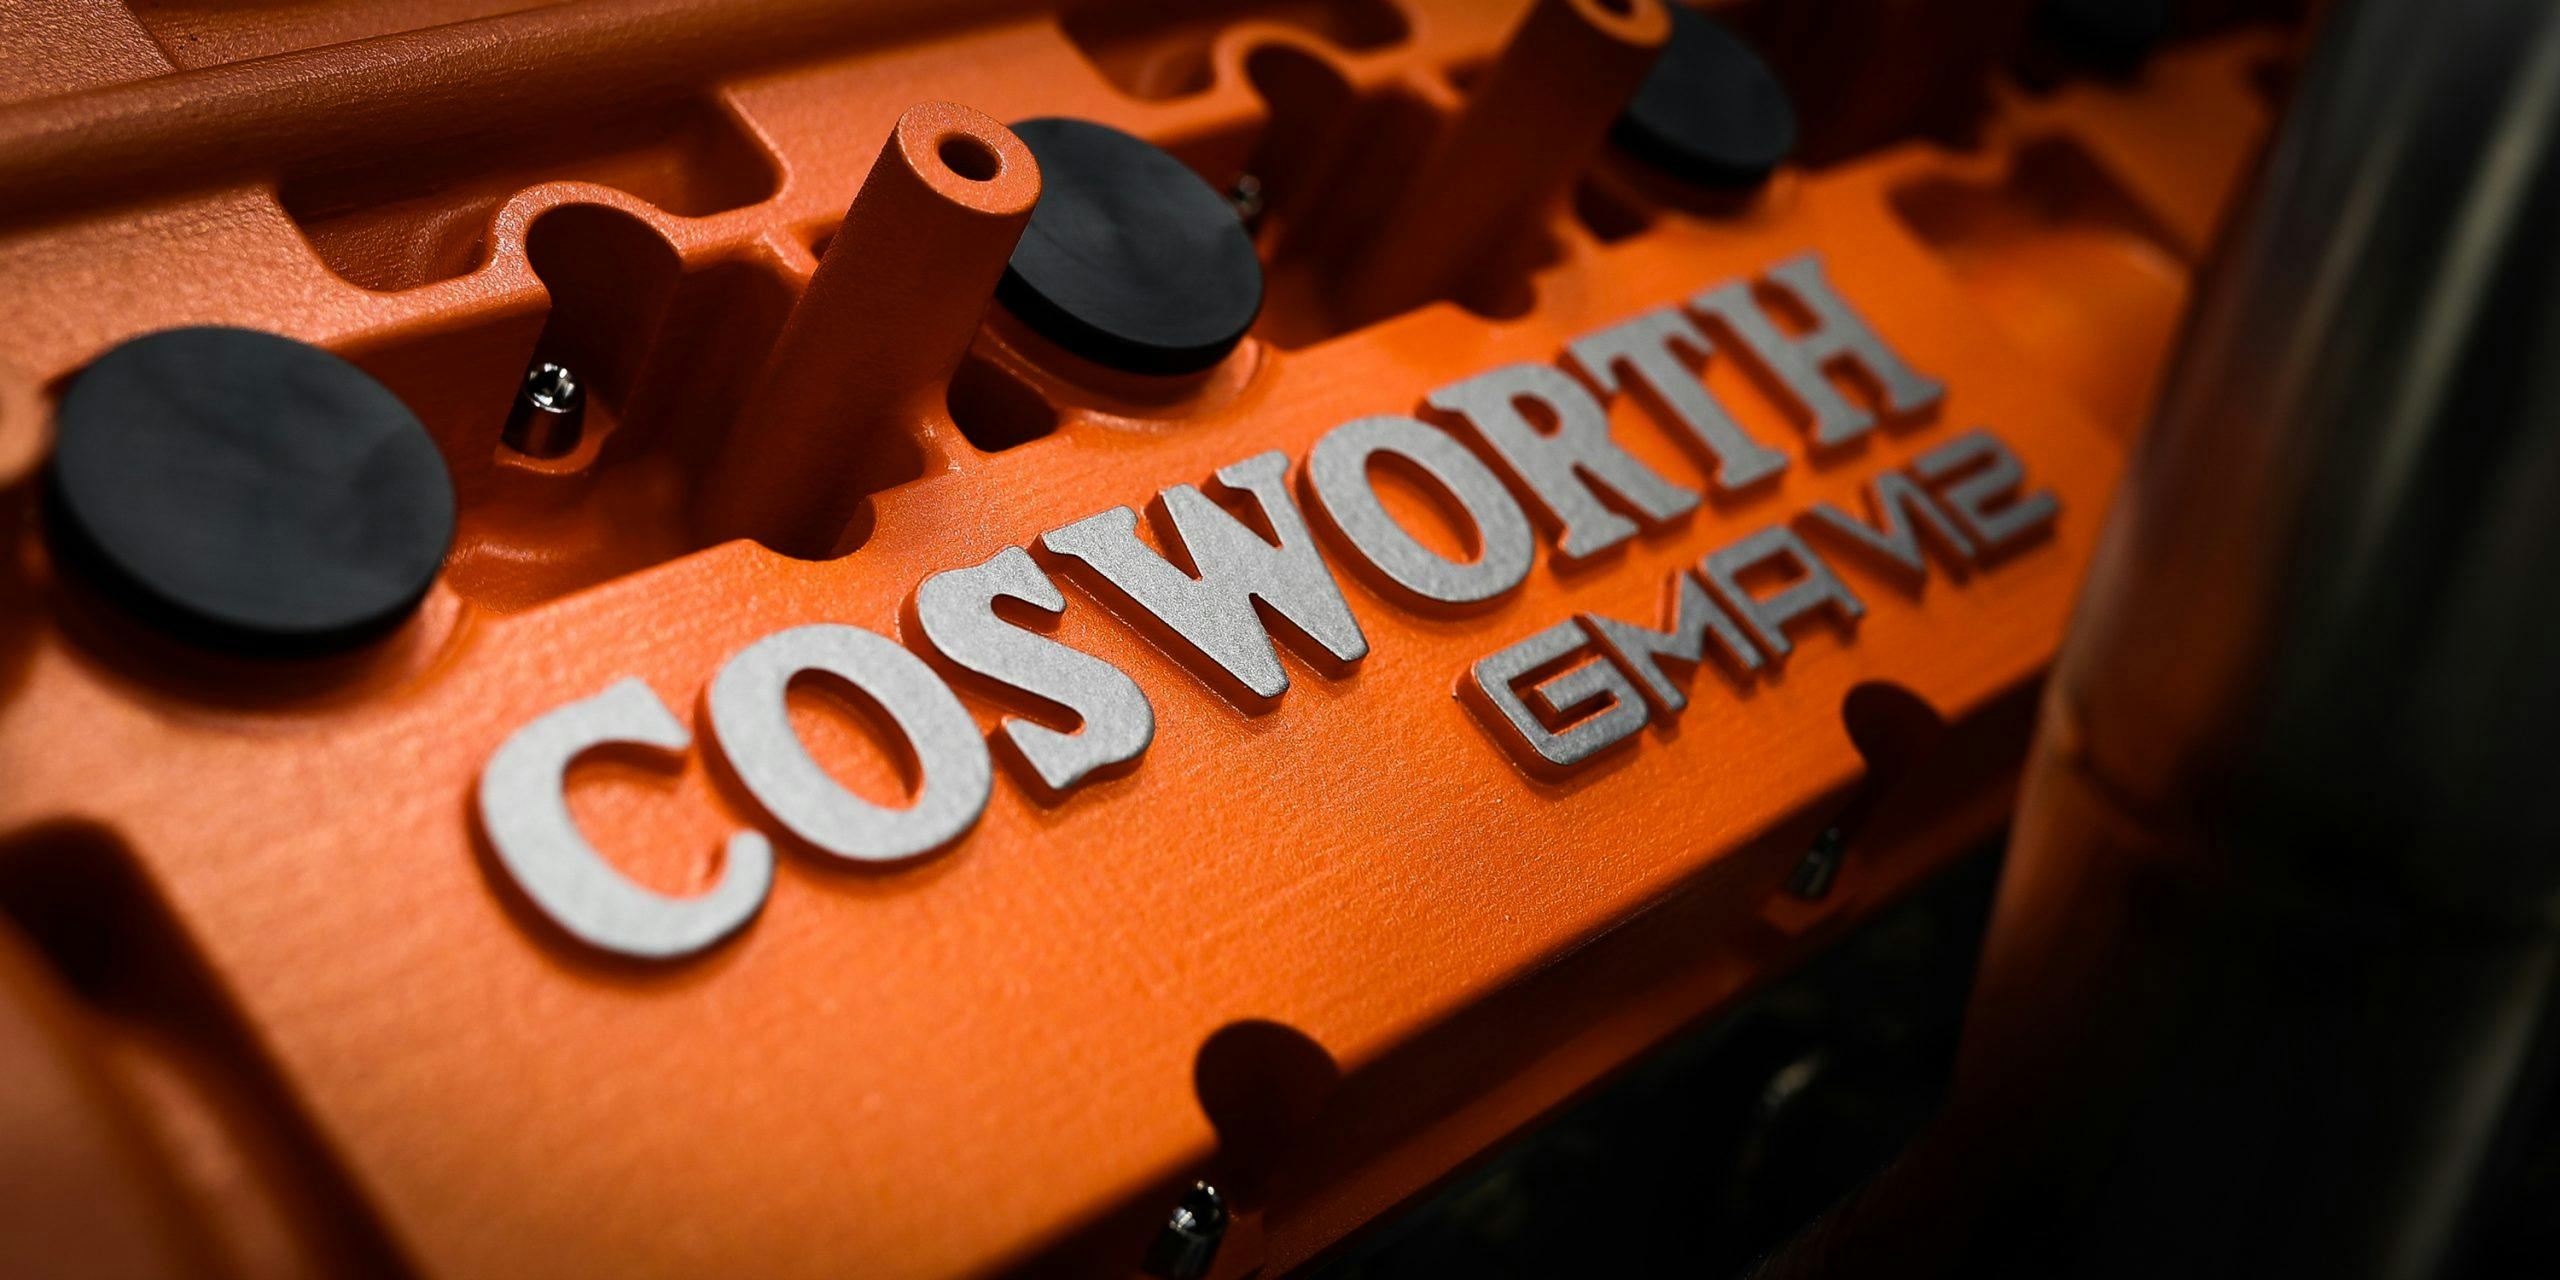 T50 cosworth engine